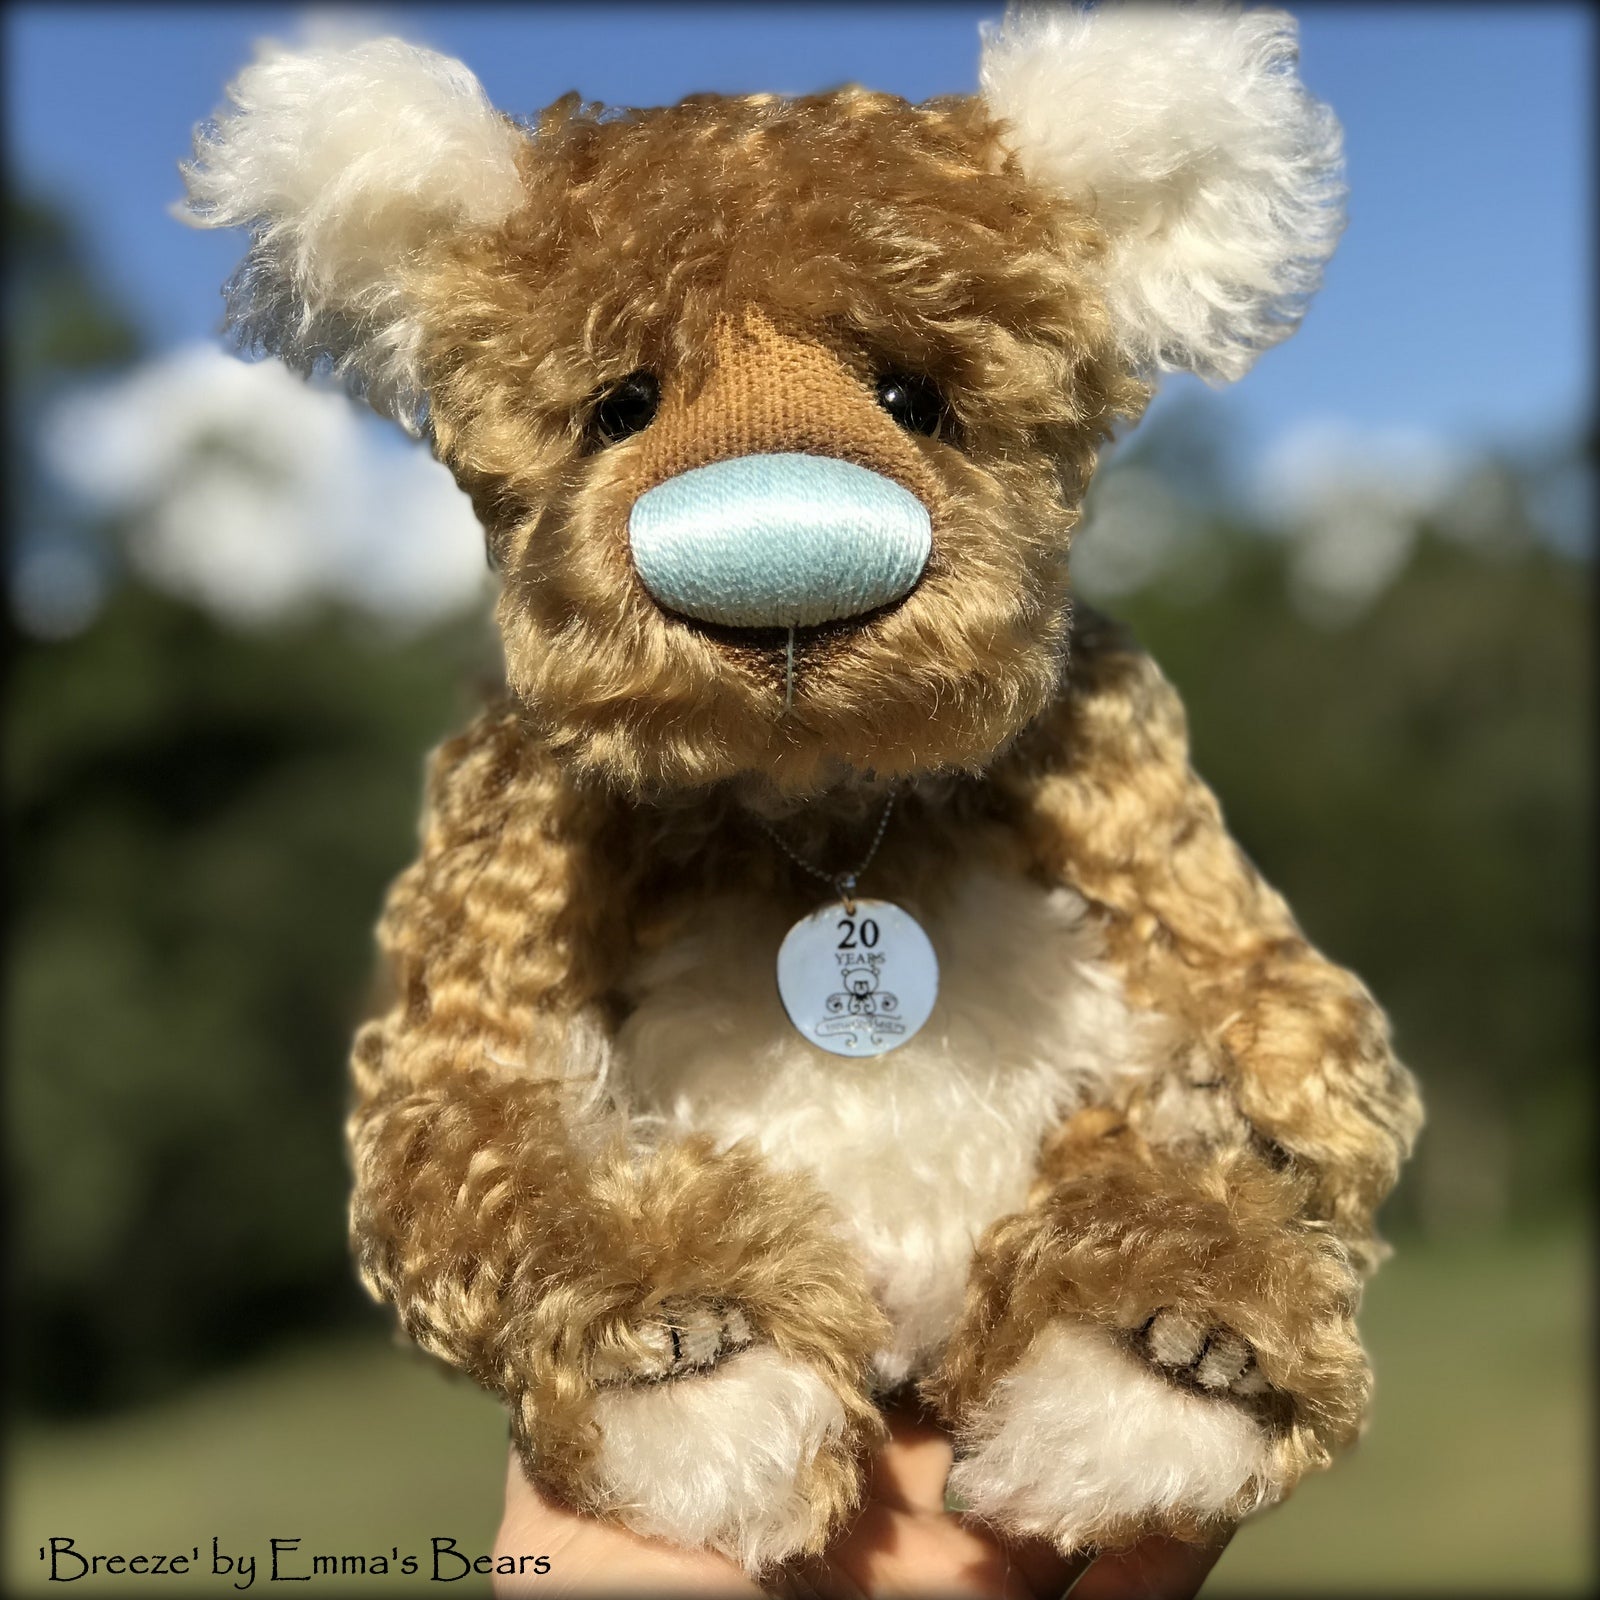 Breeze - 20 Years of Emma's Bears Commemorative Teddy - OOAK in a series